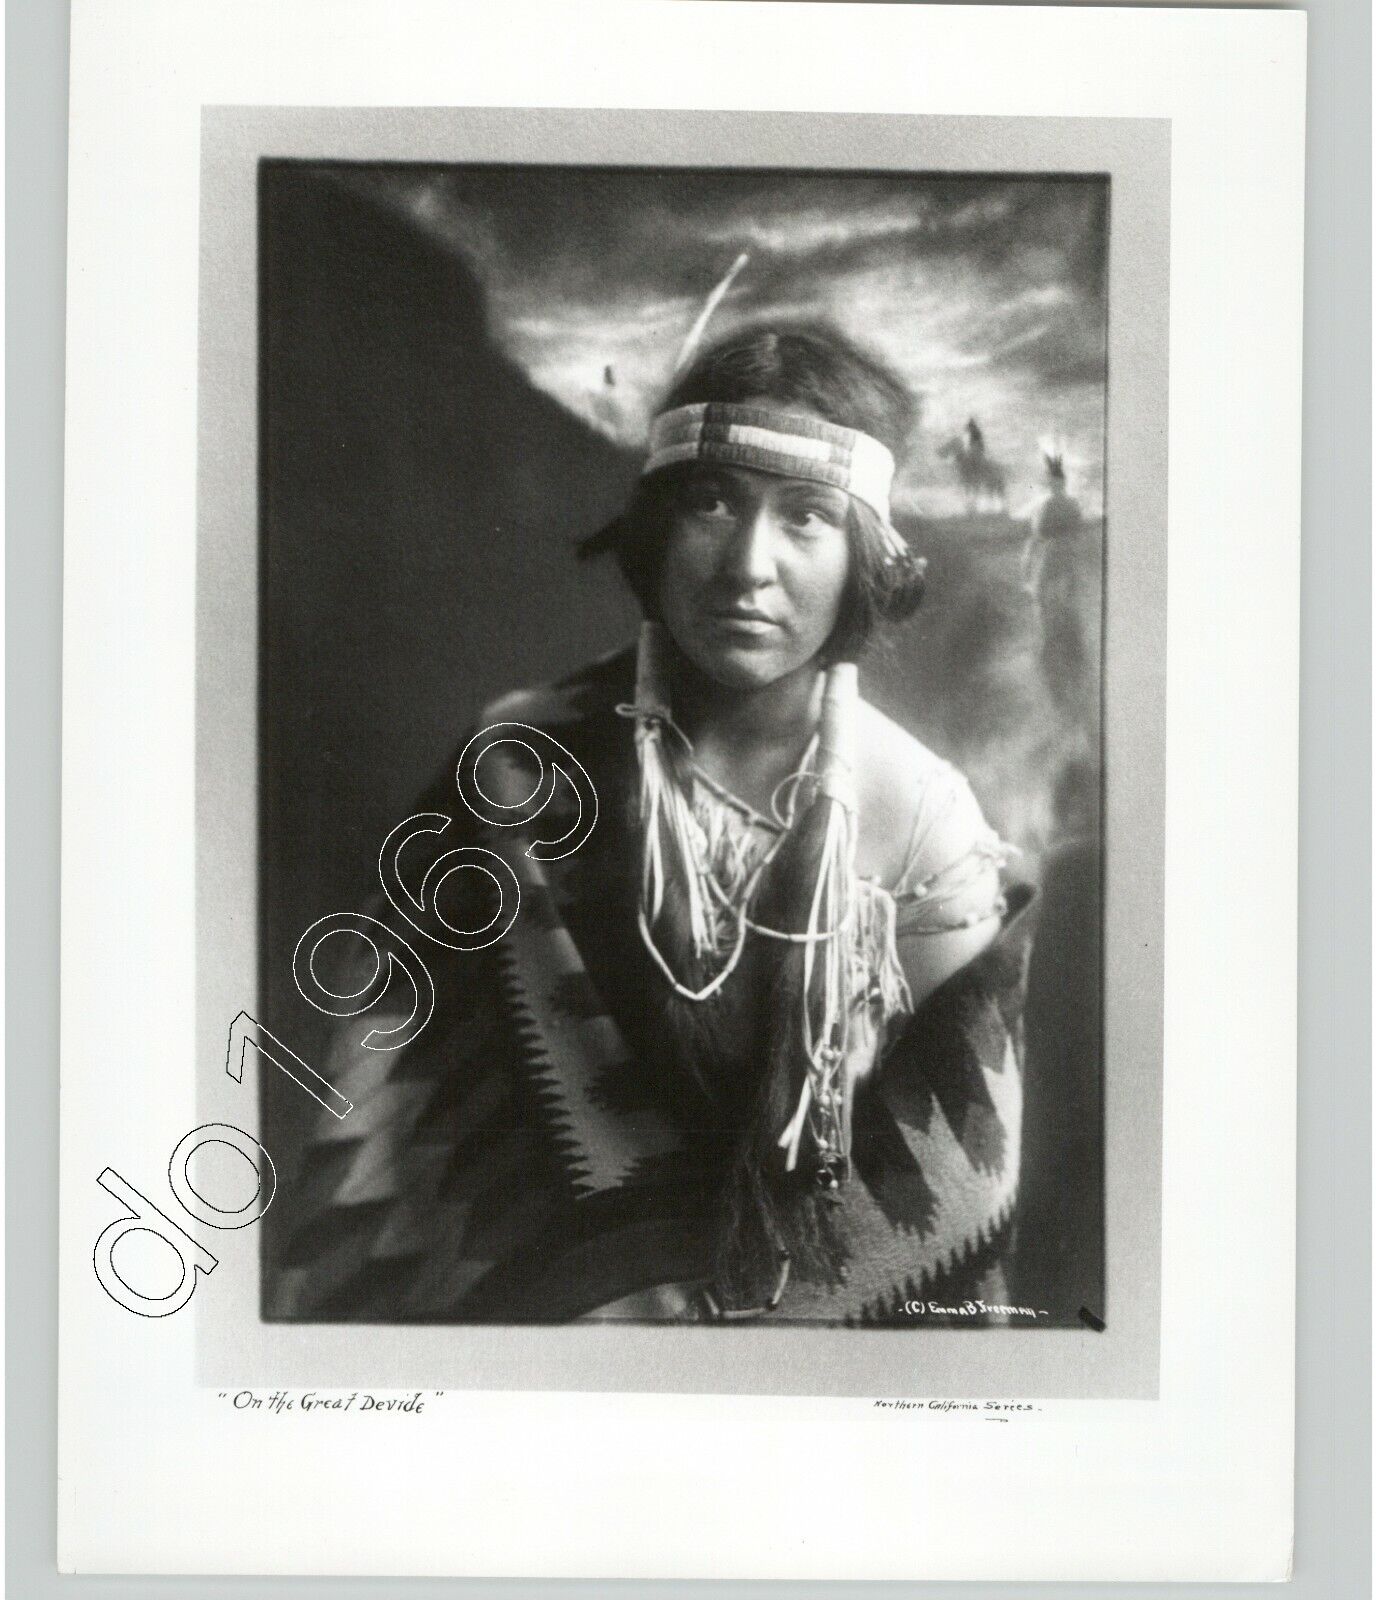 NATIVE AMERICAN INDIAN Woman CALIFORNIA c 1900 by EMMA FREEMAN 1970s Press Photo